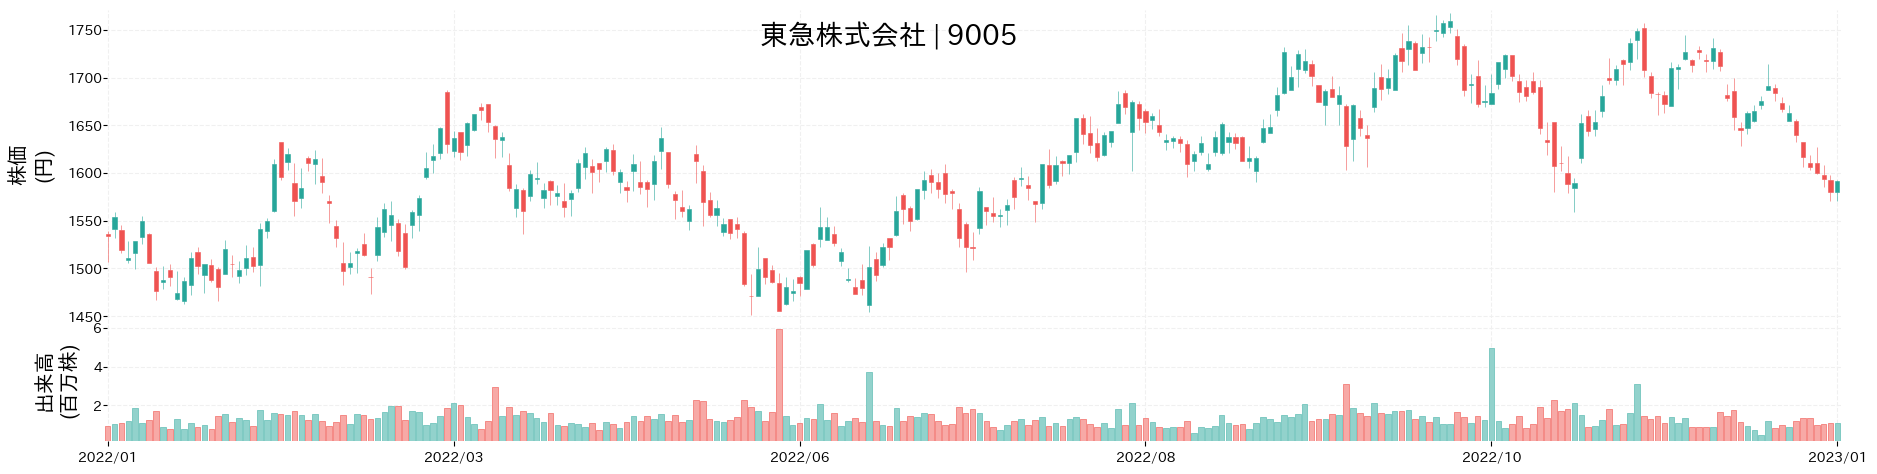 東急の株価推移(2022)